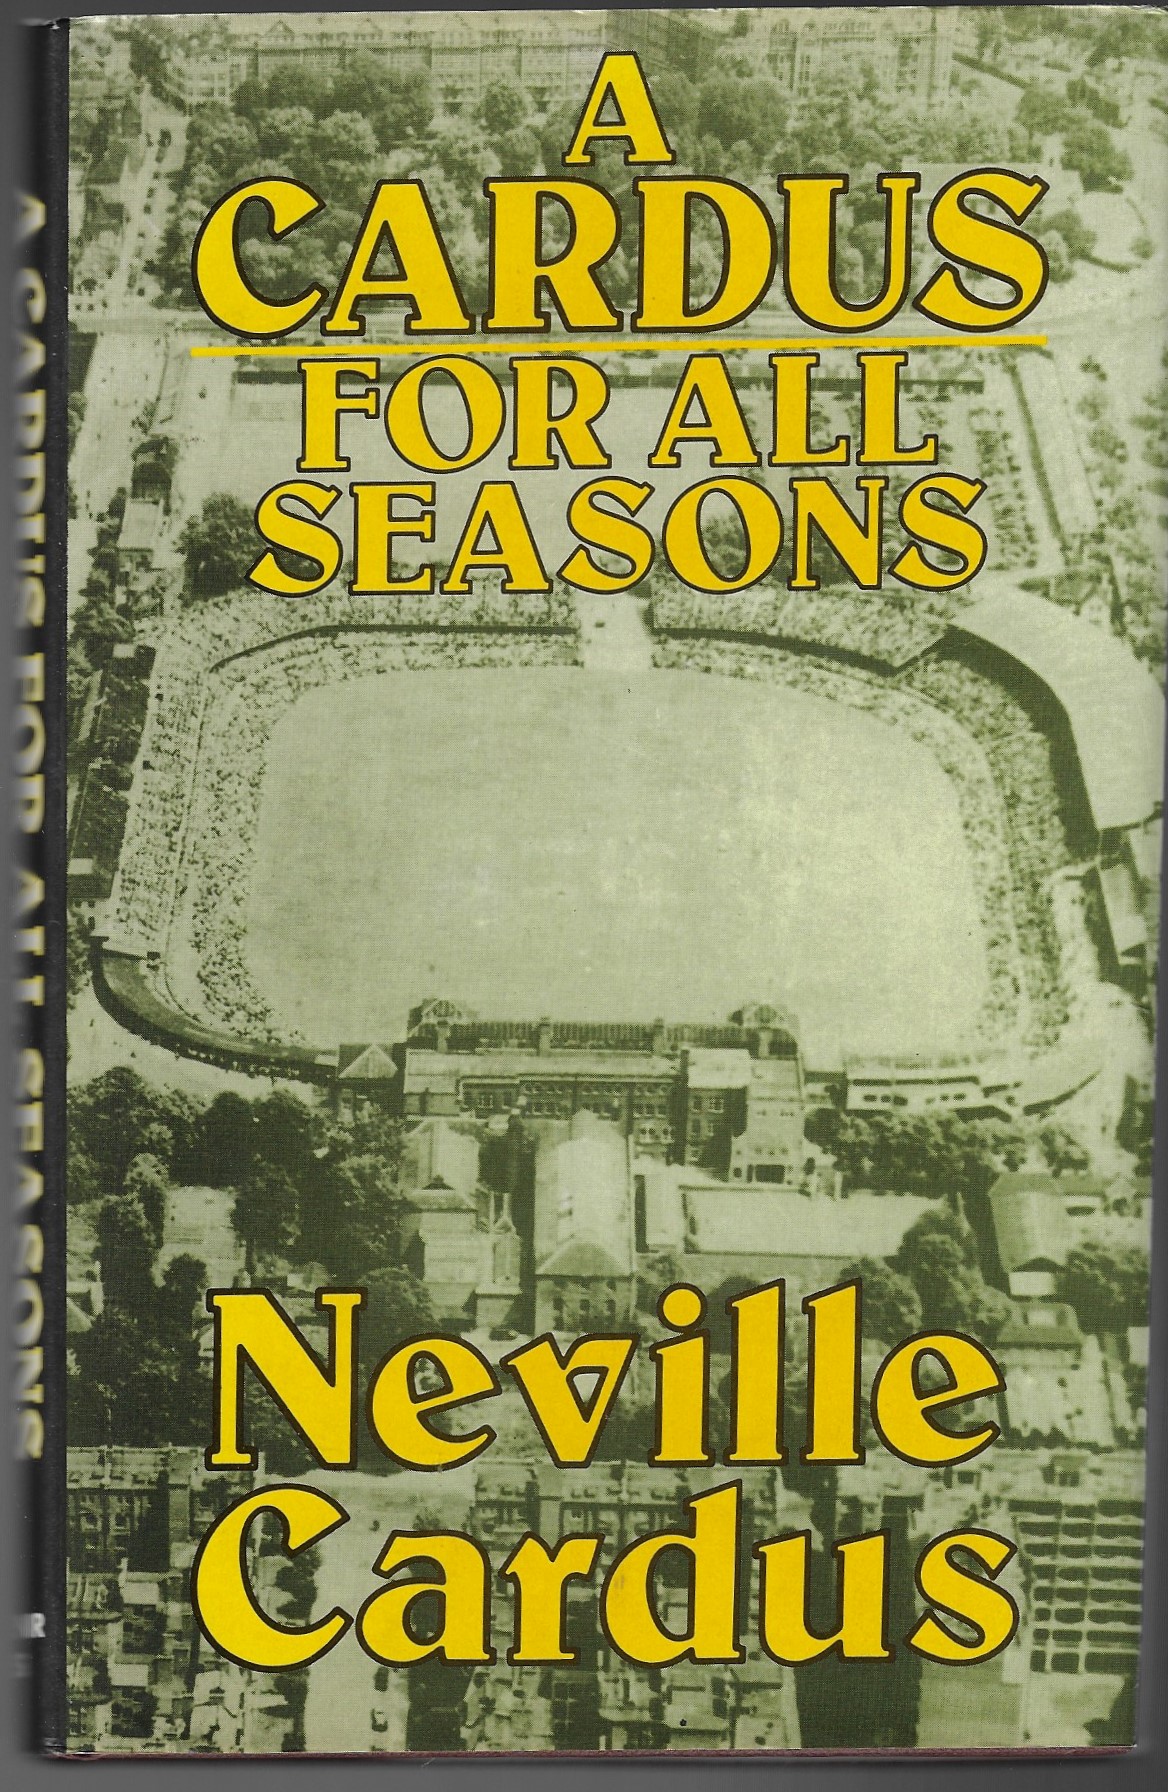 Cardus, Neville - A Cardus for all seasons